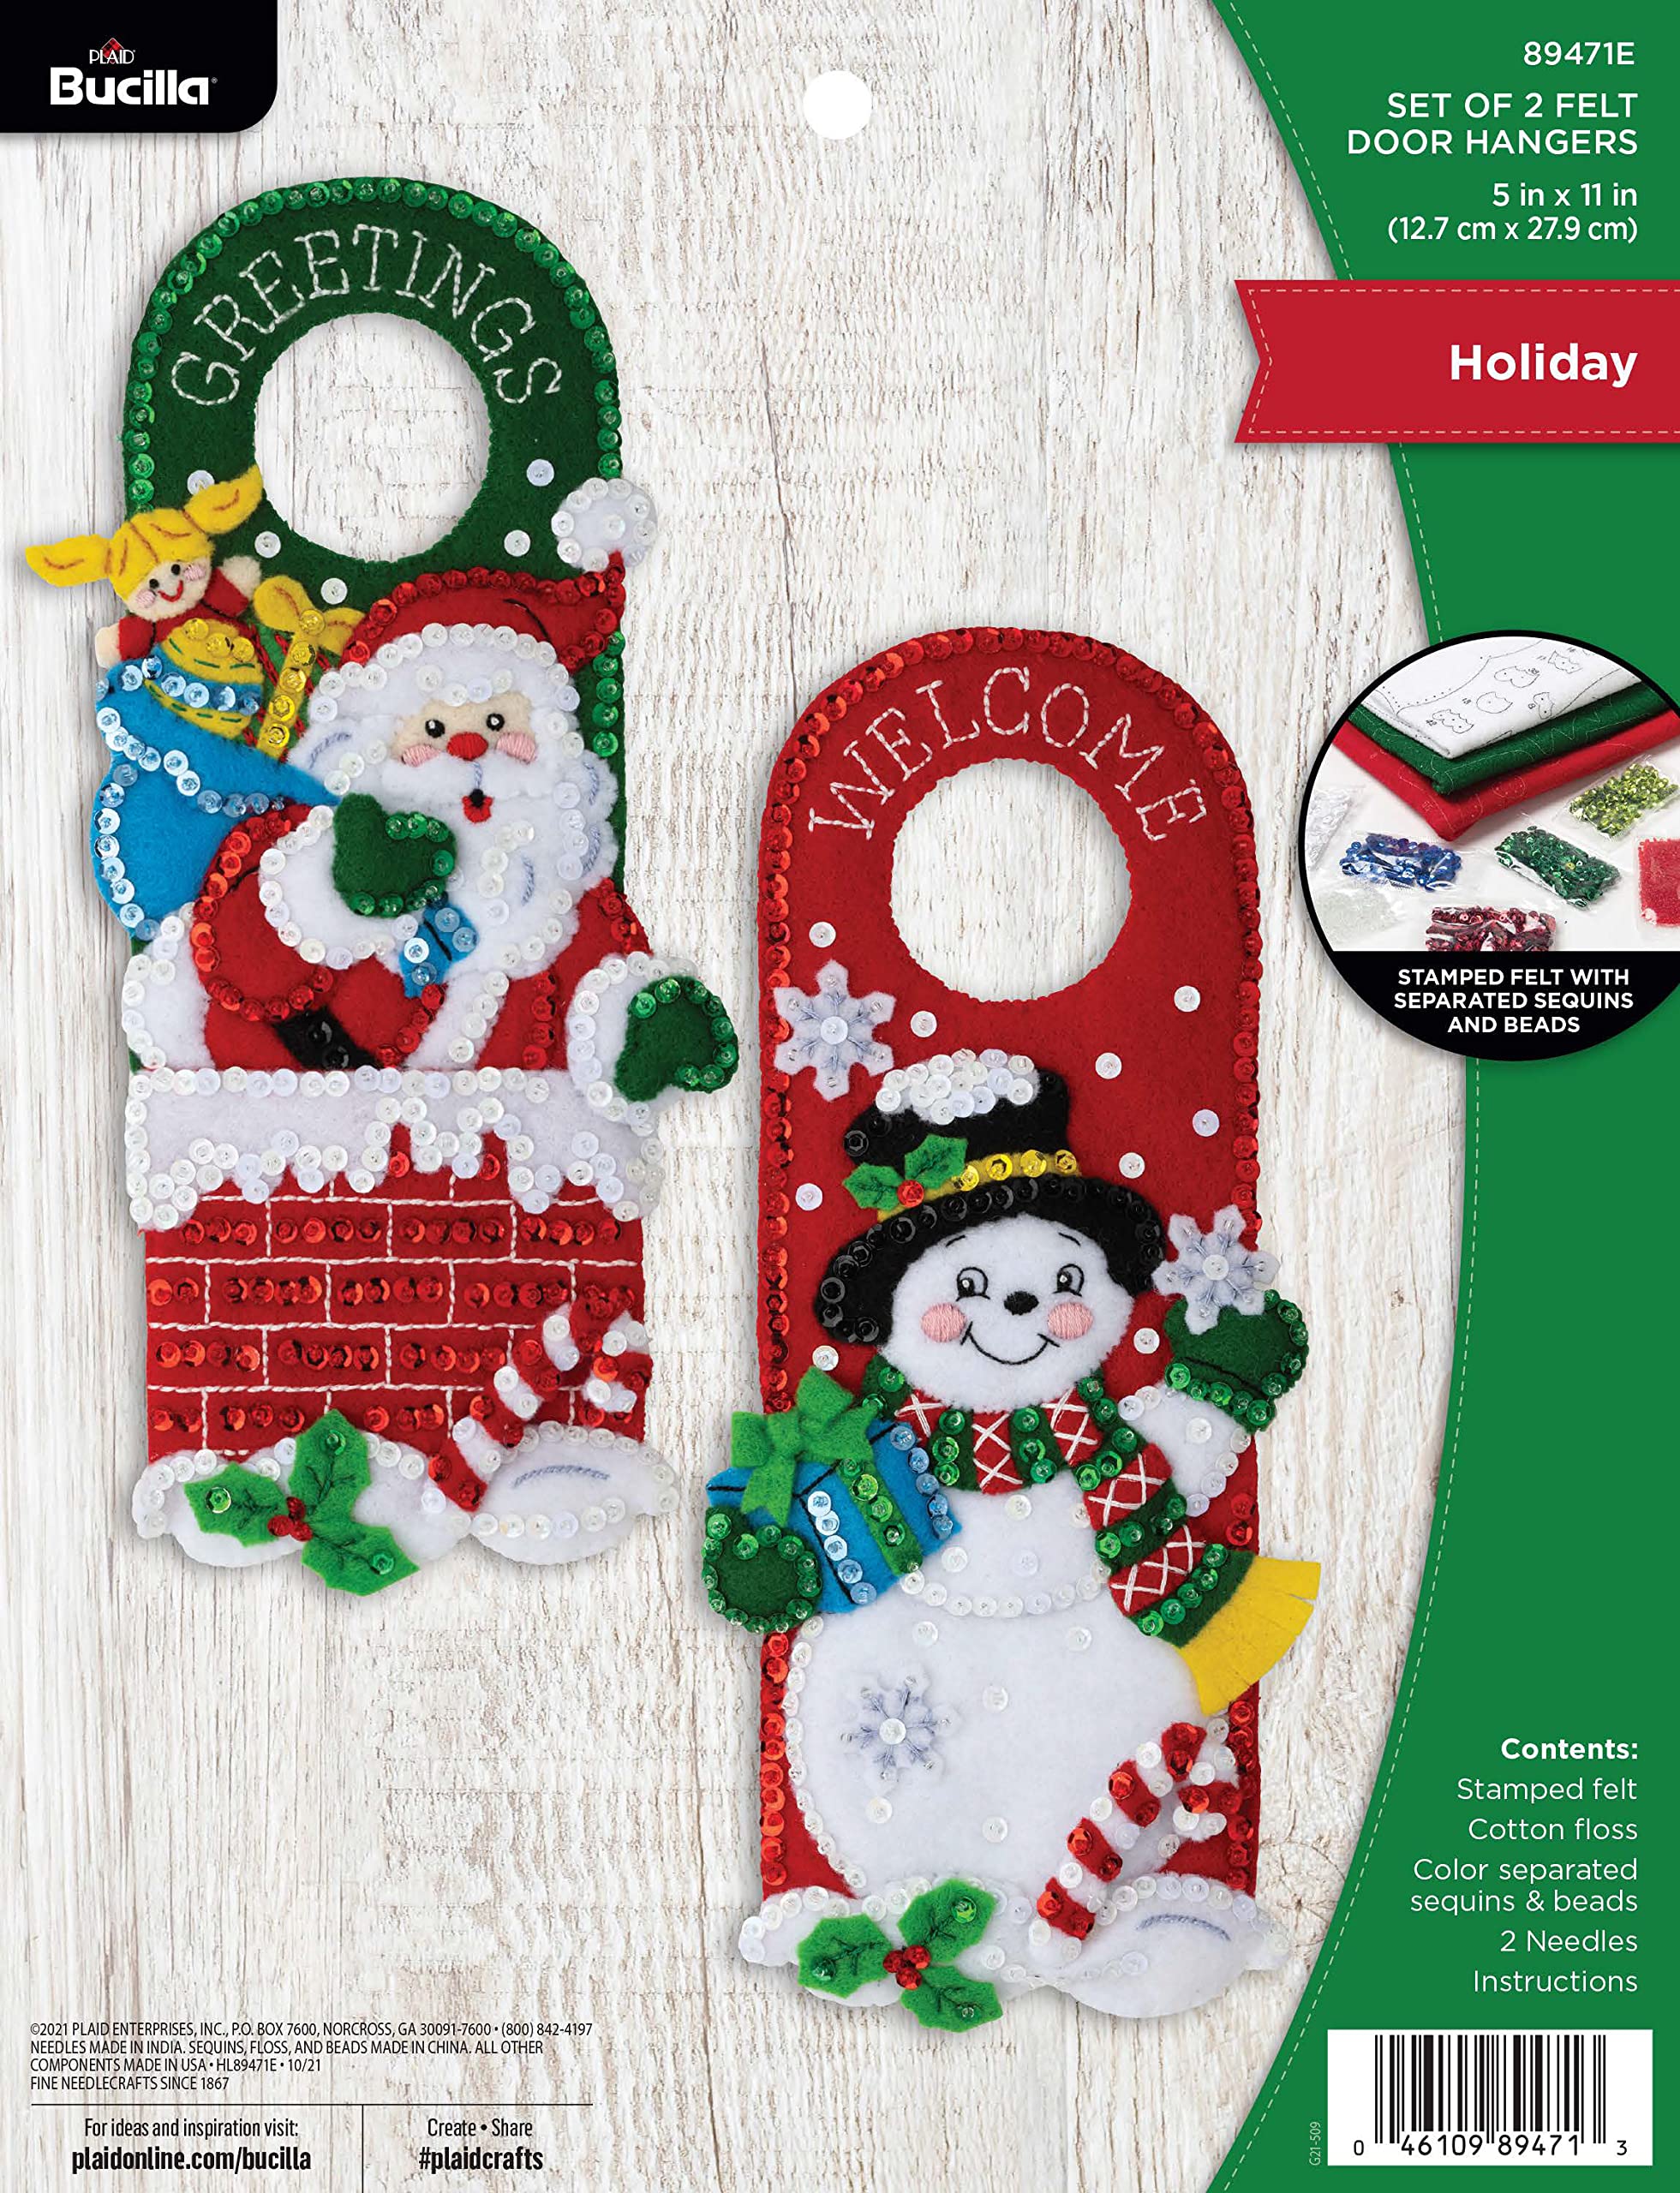 Bucilla, Holiday Christmas Set of 2 Felt Applique Door Hanger Making Kit, Supplies for DIY Needlepoint Arts and Crafts, 89471E